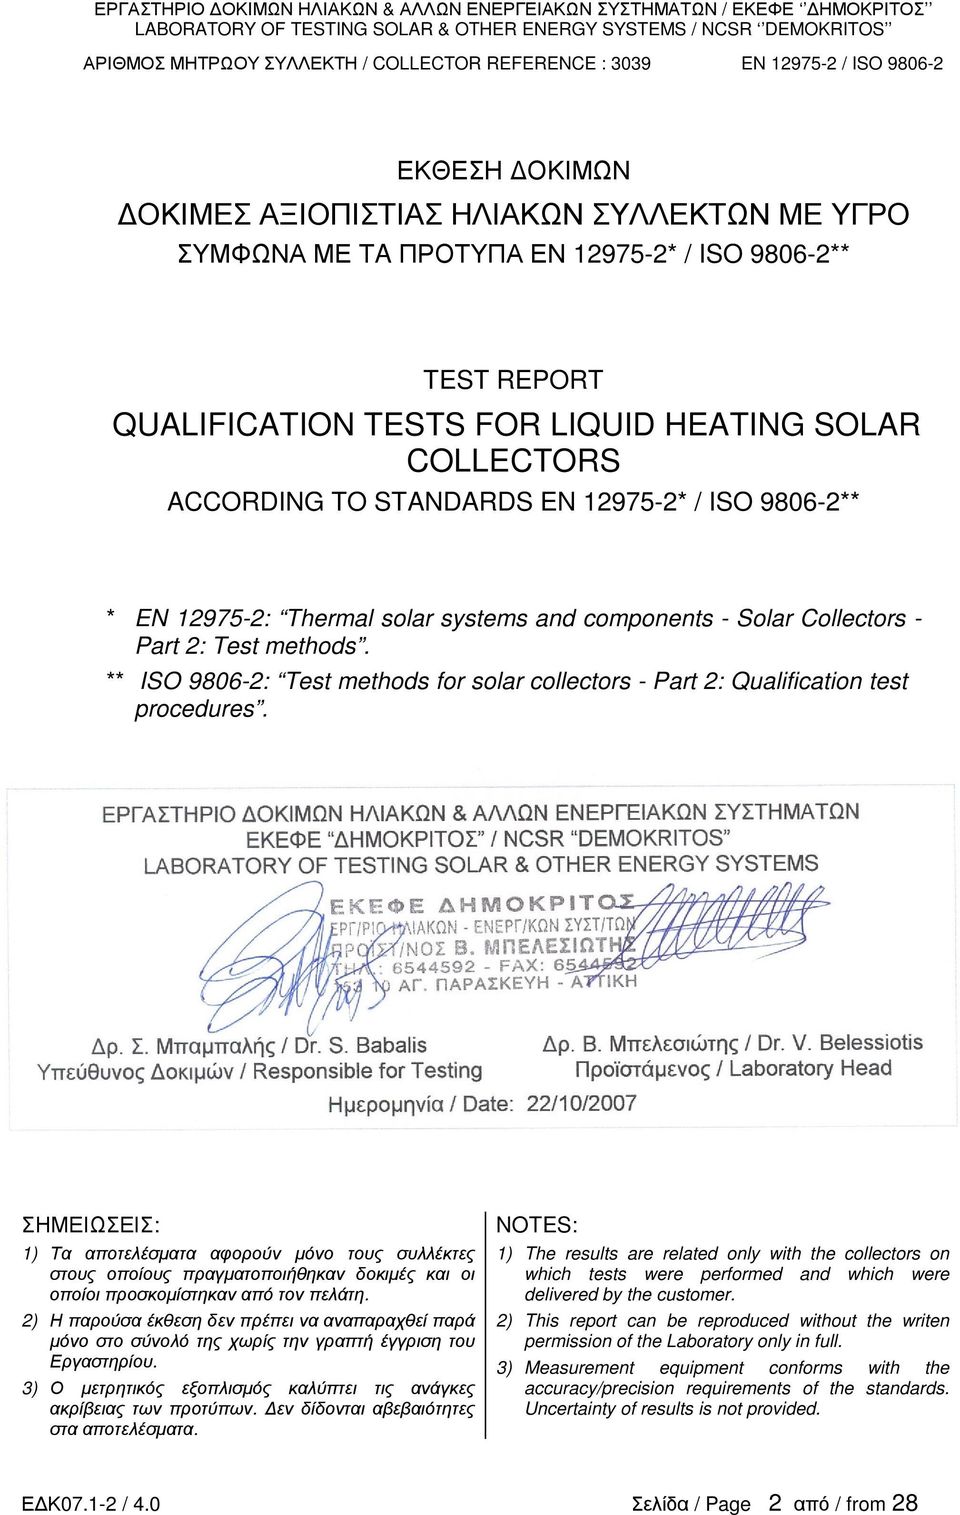 ** ISO 9862: Test methods for solar collectors Part 2: Qualification test procedures.